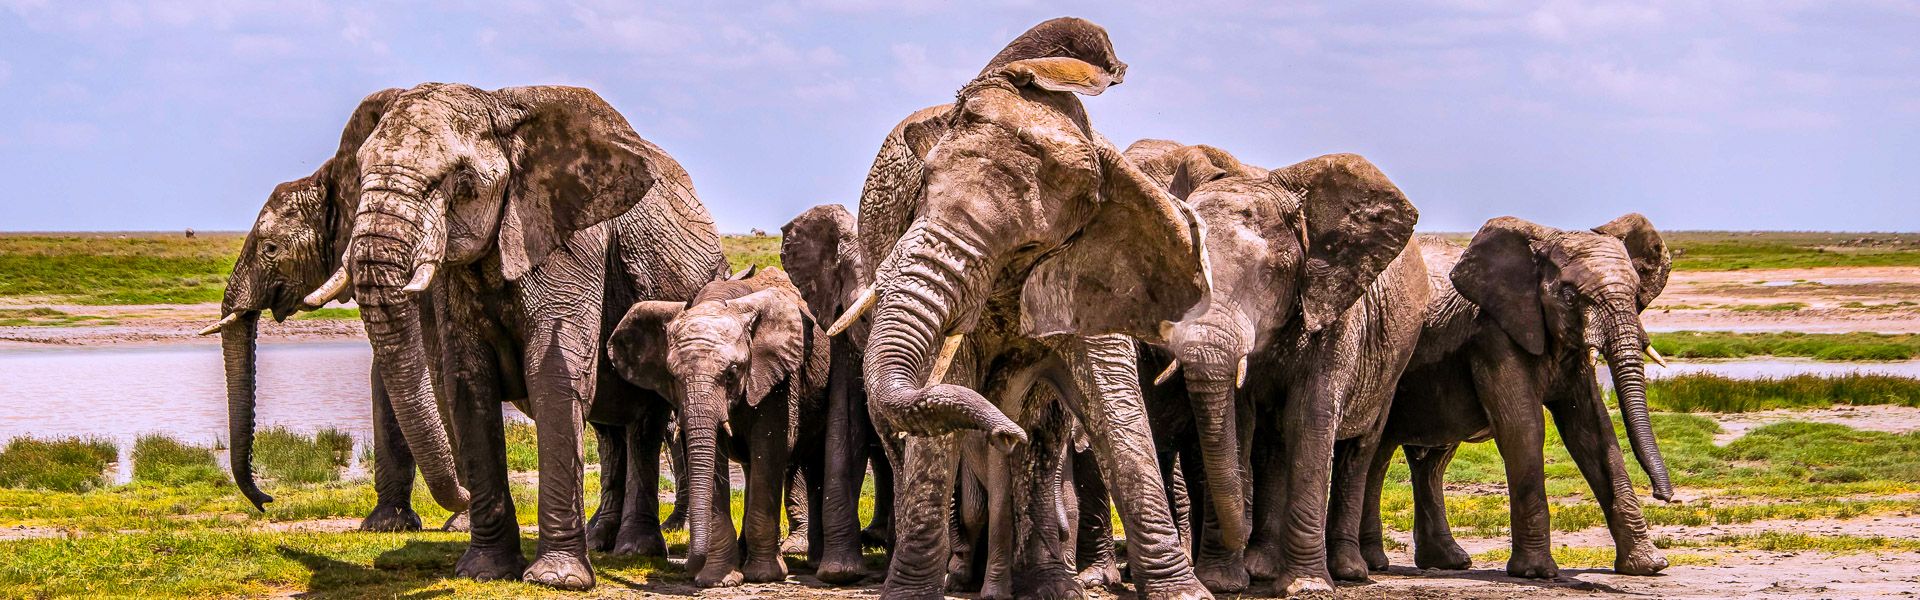 Elefantenfamilie im Serengeti Nationalpark |  Veronica Crocitti, EyeEm / Chamleon